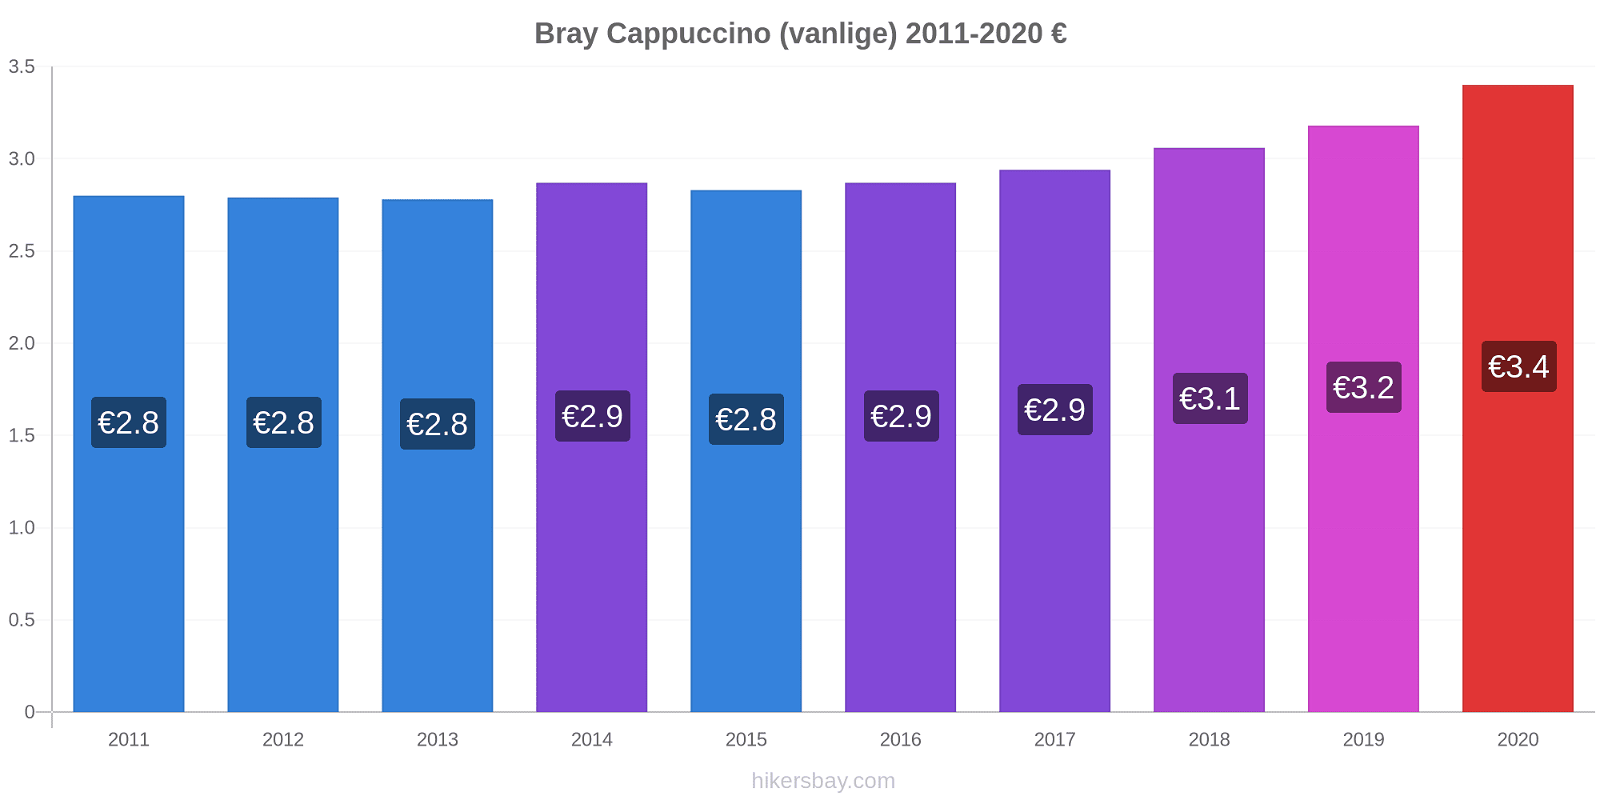 Bray prisendringer Cappuccino (vanlige) hikersbay.com